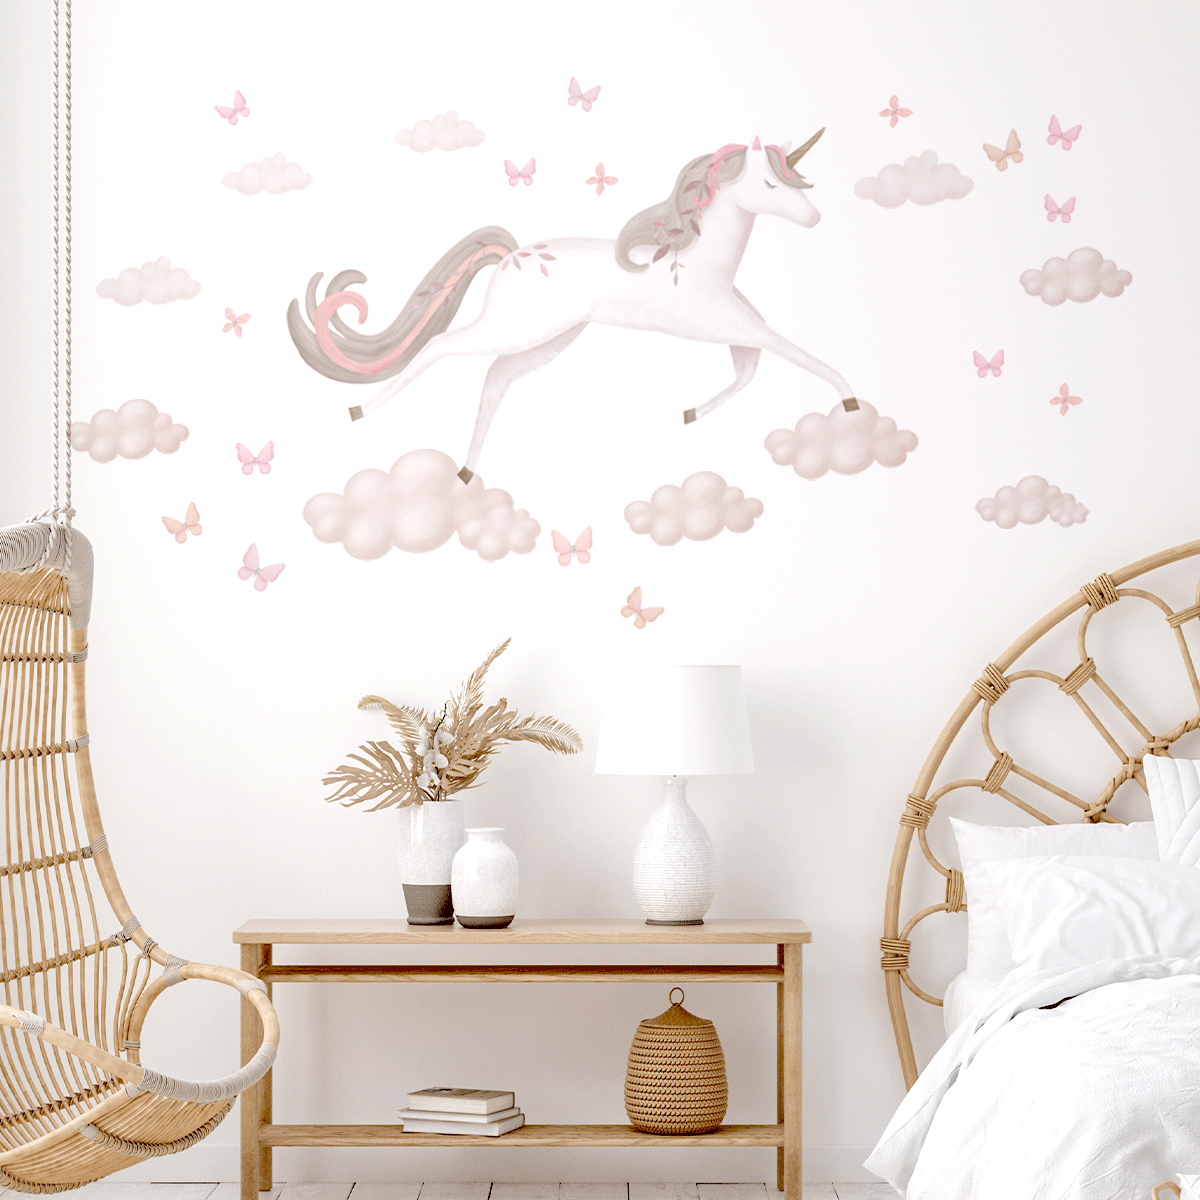 Unicorn wall stickers - Magical unicorn on clouds